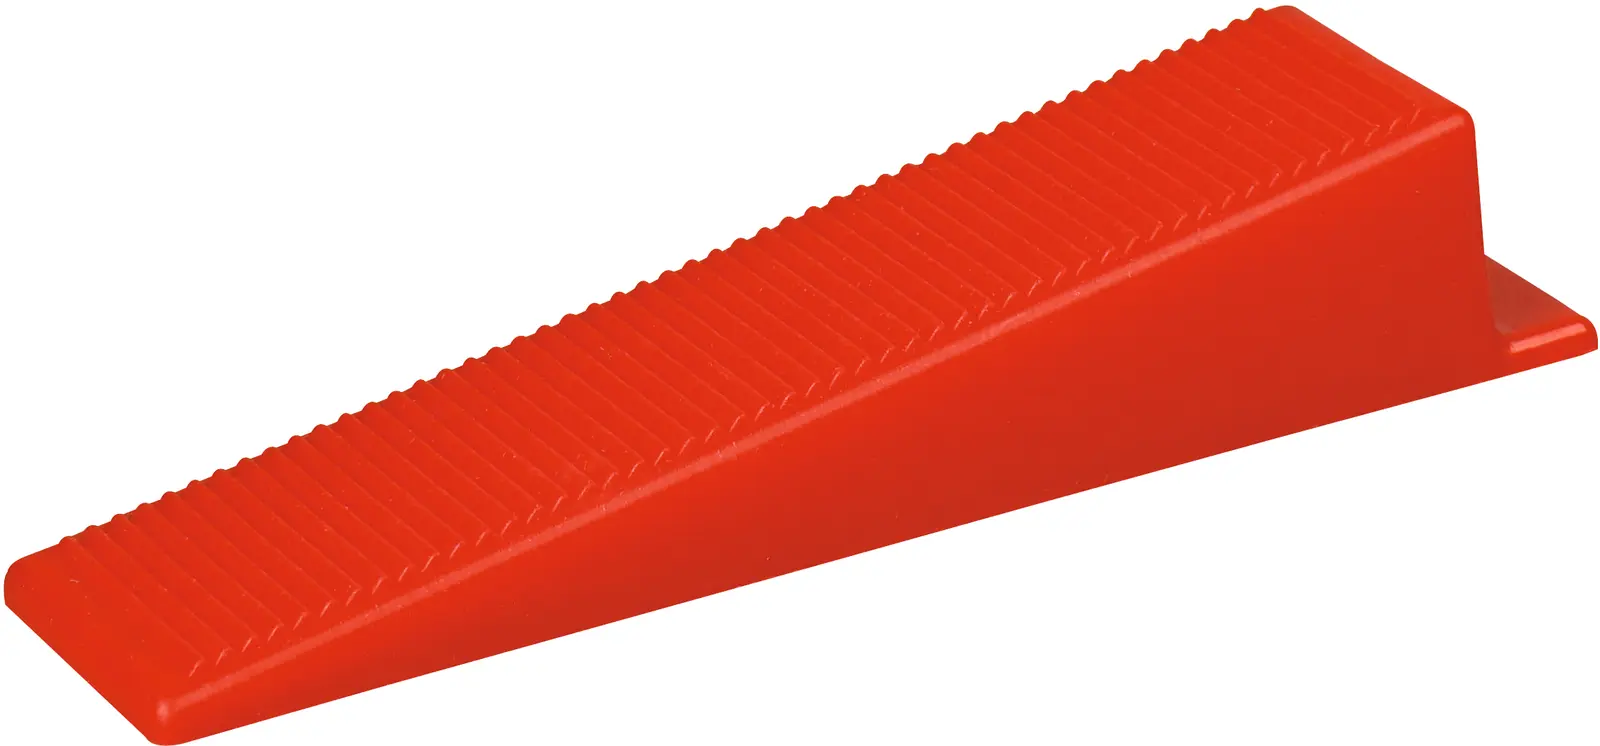 Nivellierzange orange Metall Kunststoffüberzogen Fliesen Nivelliersystem 